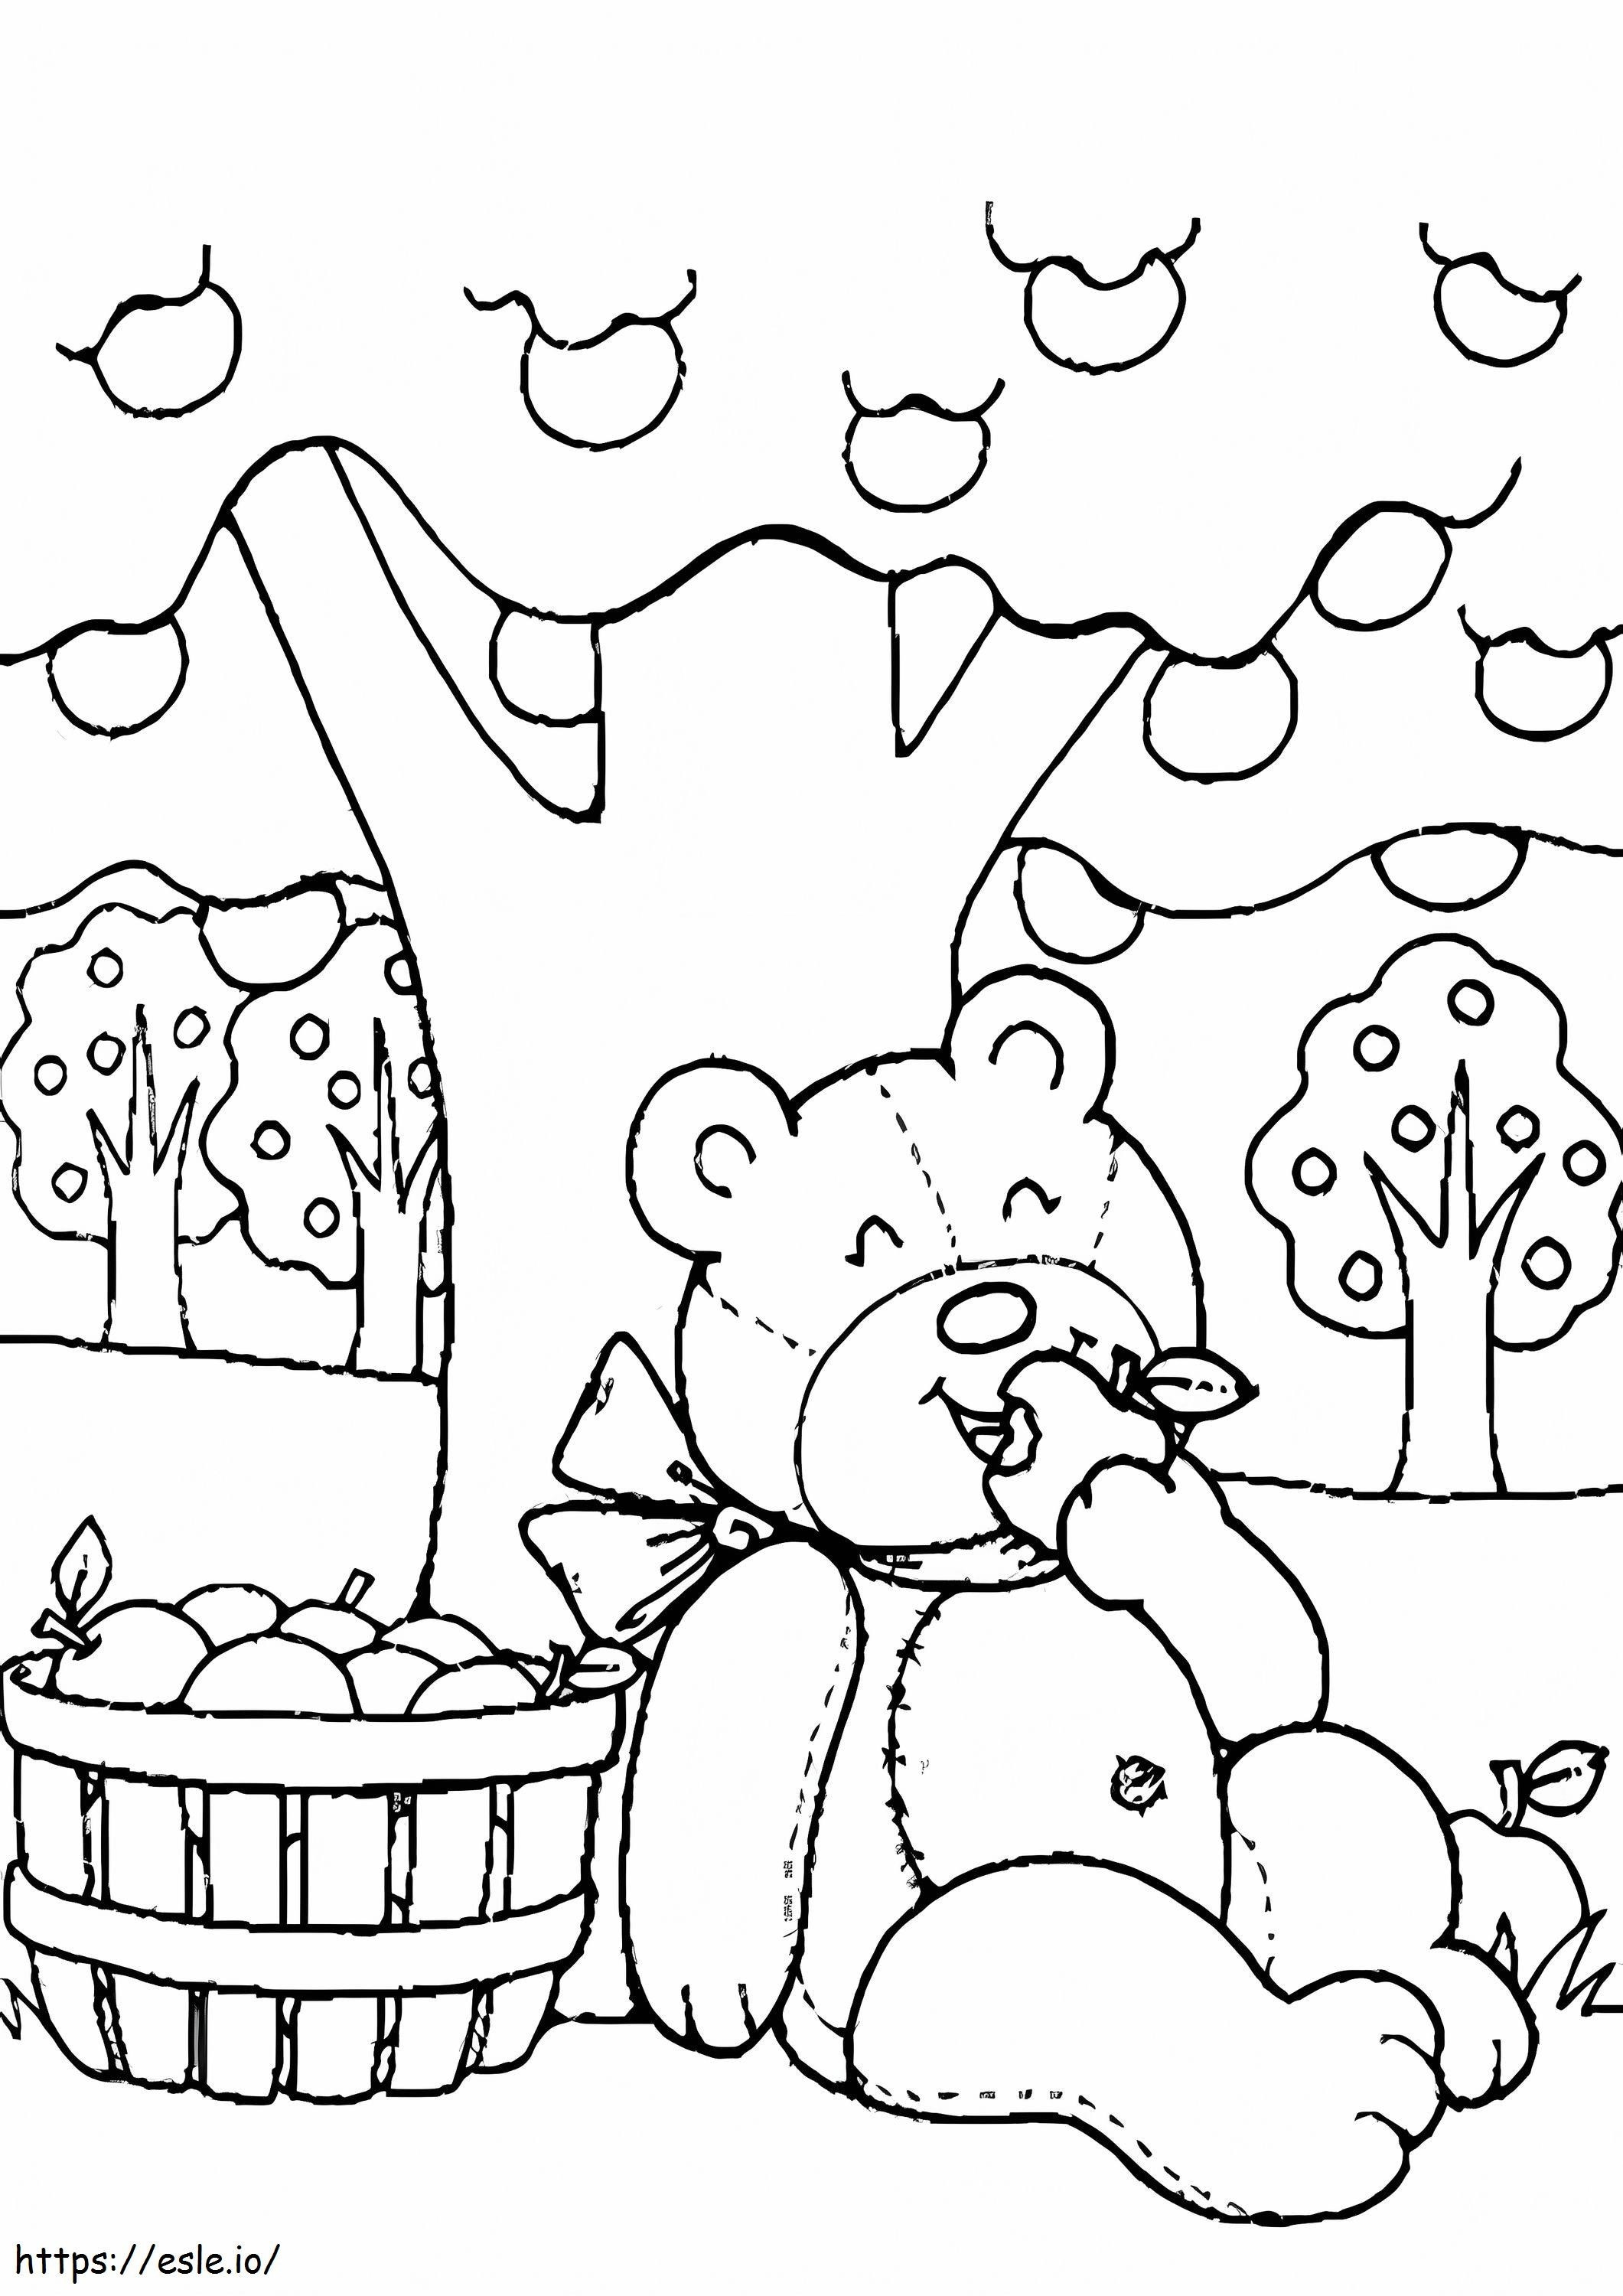 Teddybär isst Äpfel mit Apfelbaum ausmalbilder